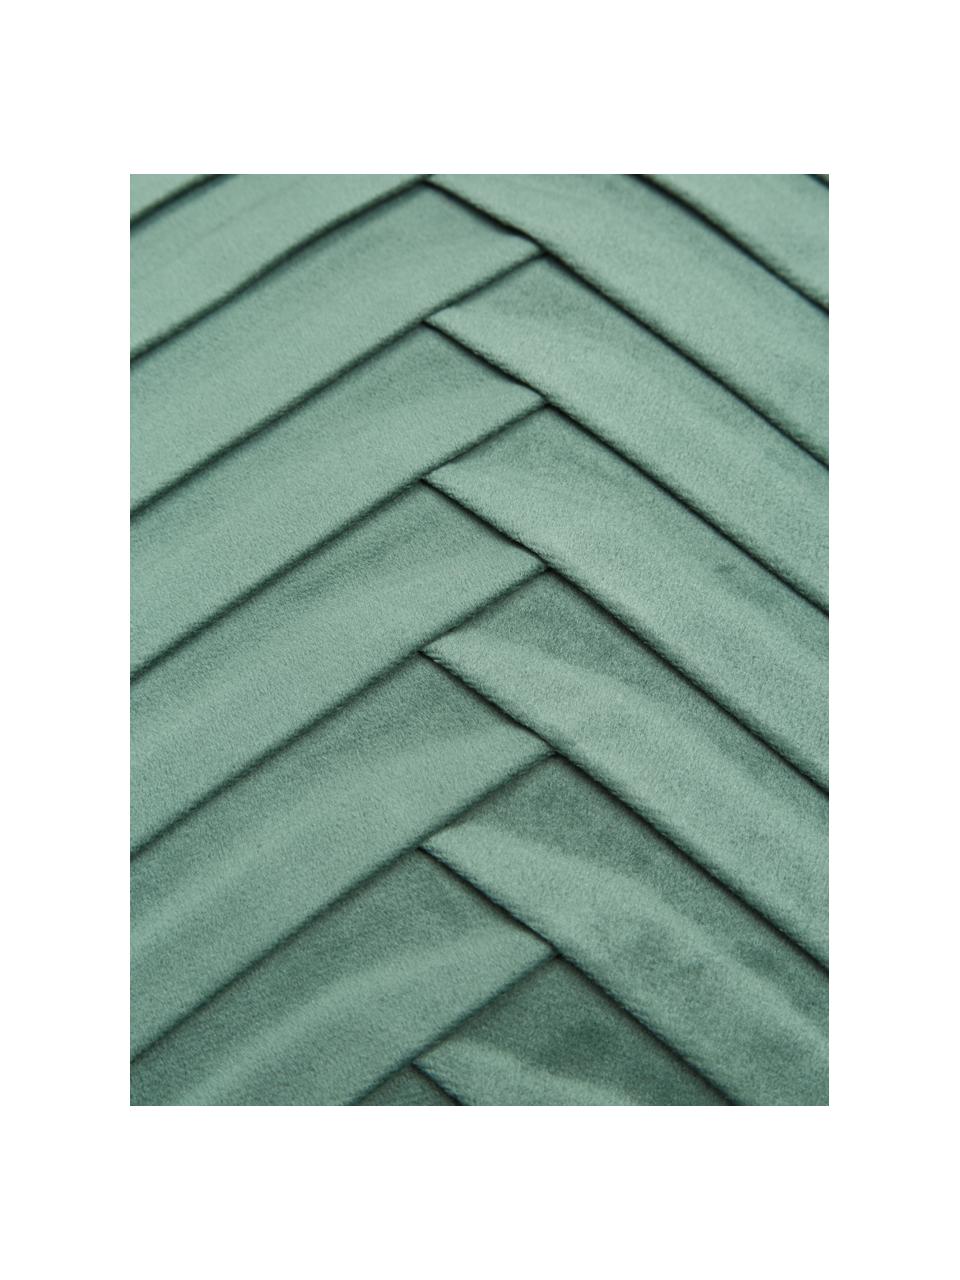 Fluwelen kussenhoes Lucie in donkergroen met structuur-oppervlak, 100% fluweel (polyester), Groen, B 45 x L 45 cm